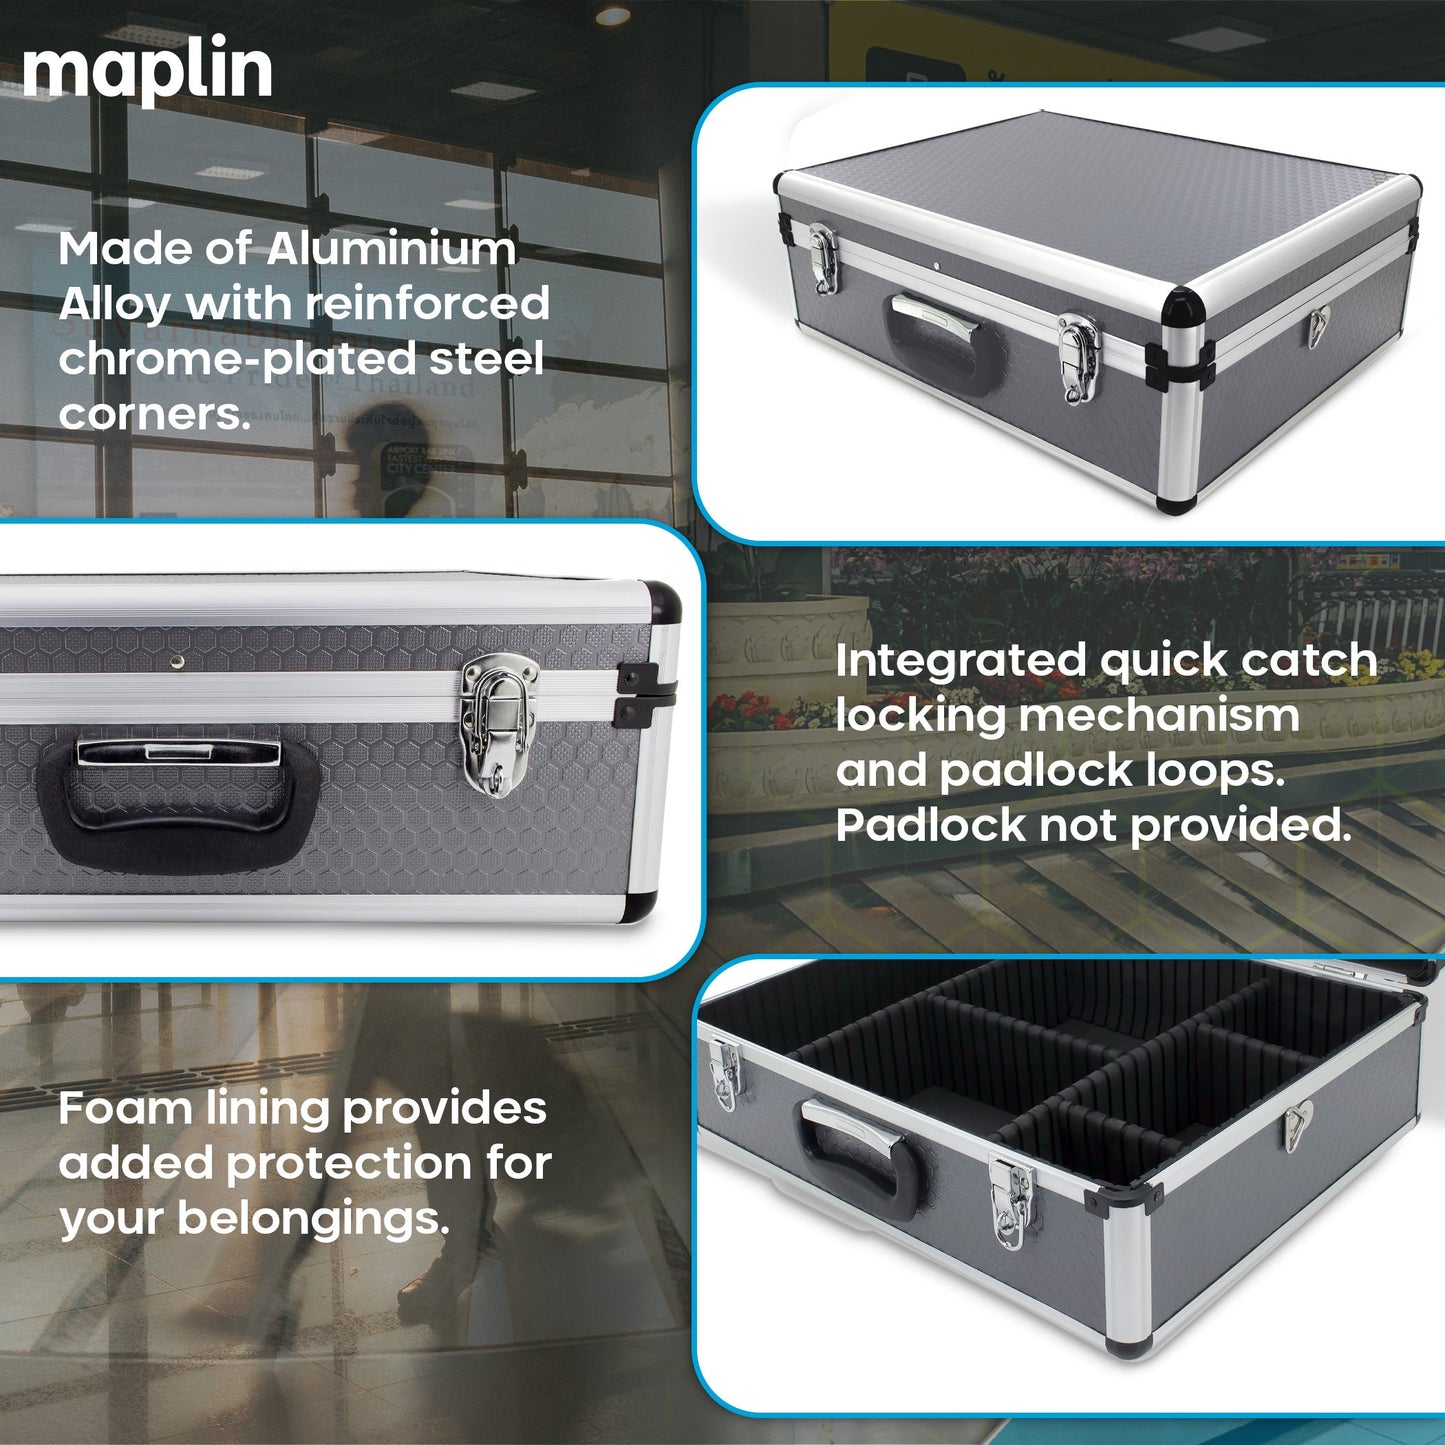 Maplin Plus Aluminium 160 x 460 x 360mm Tool Flight Case - Silver - maplin.co.uk